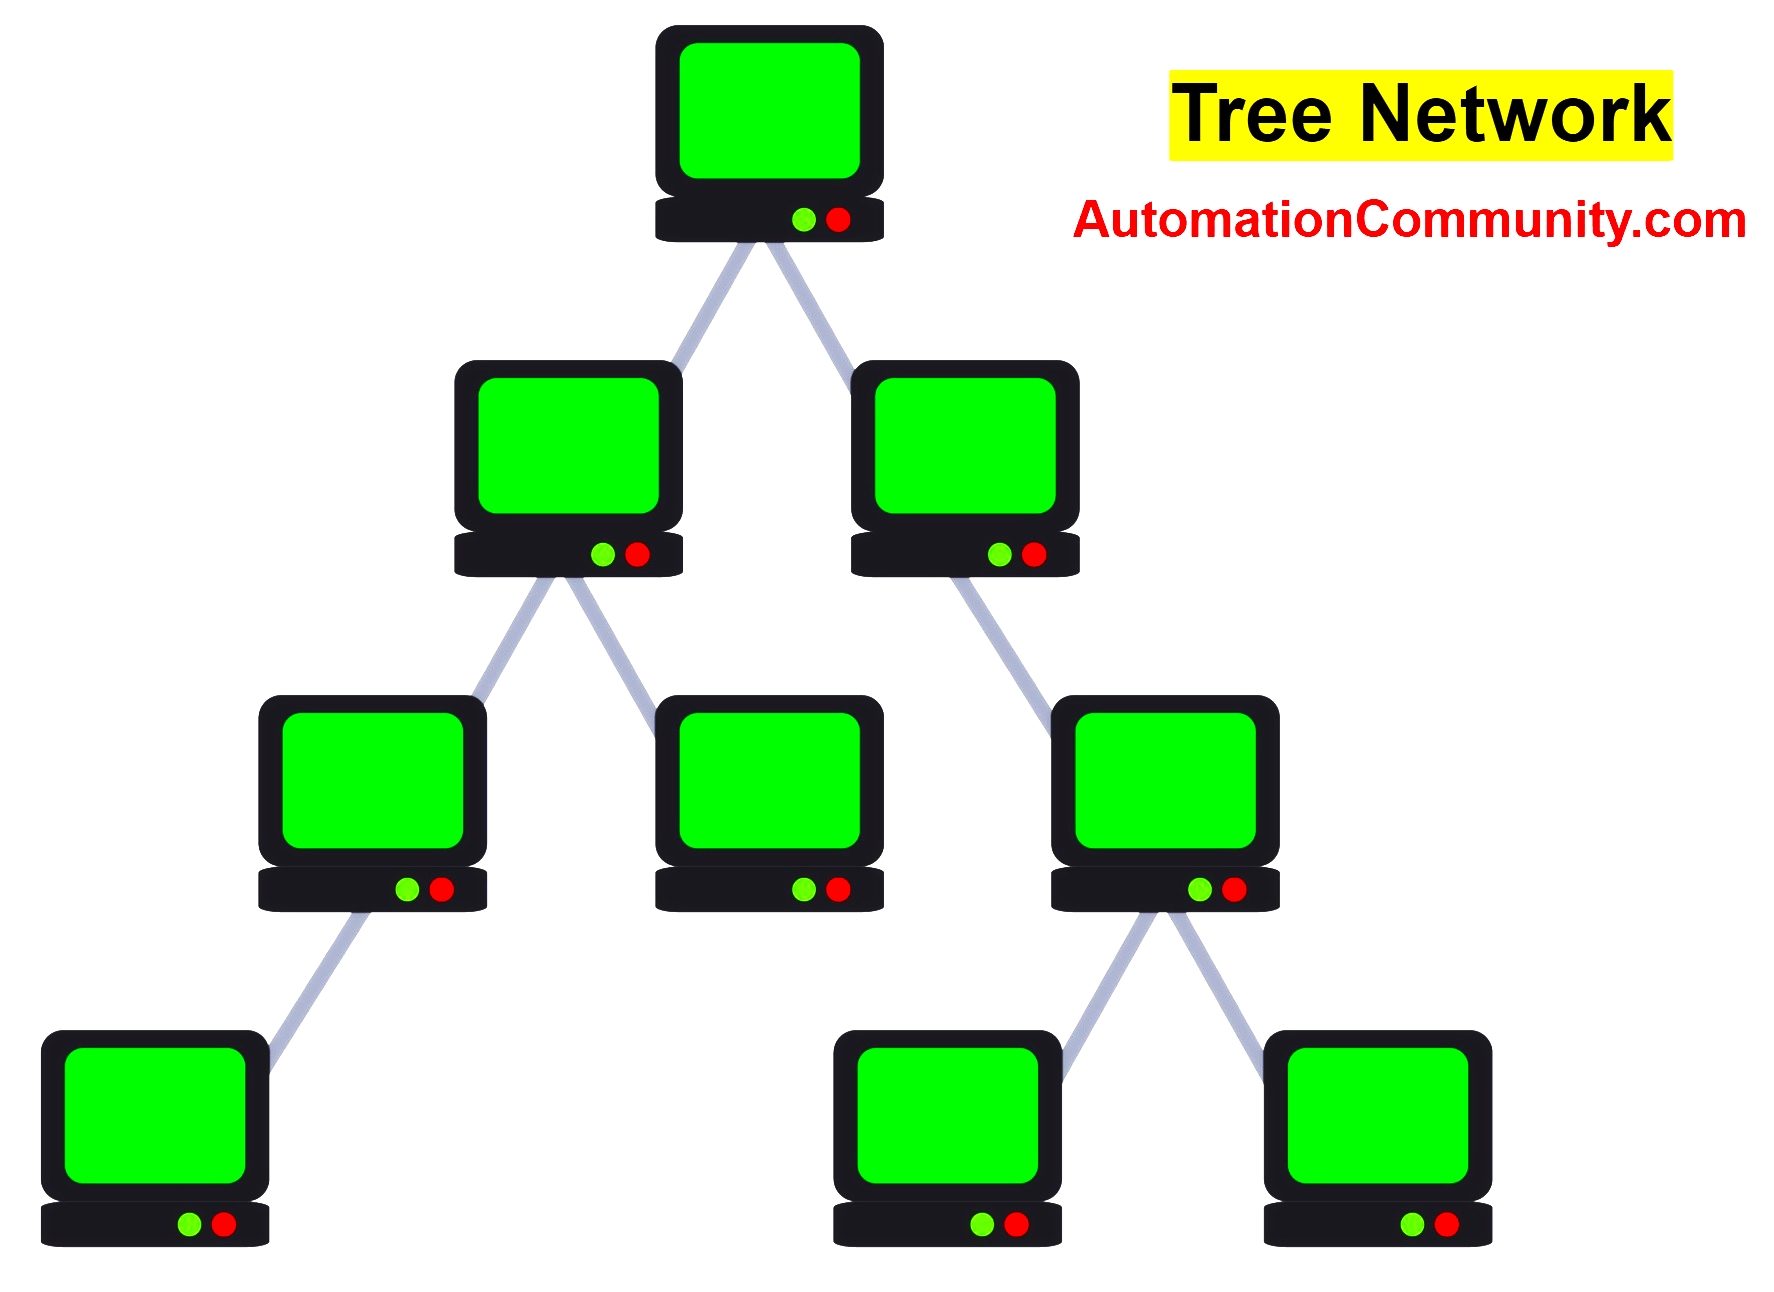 Tree Network Topology